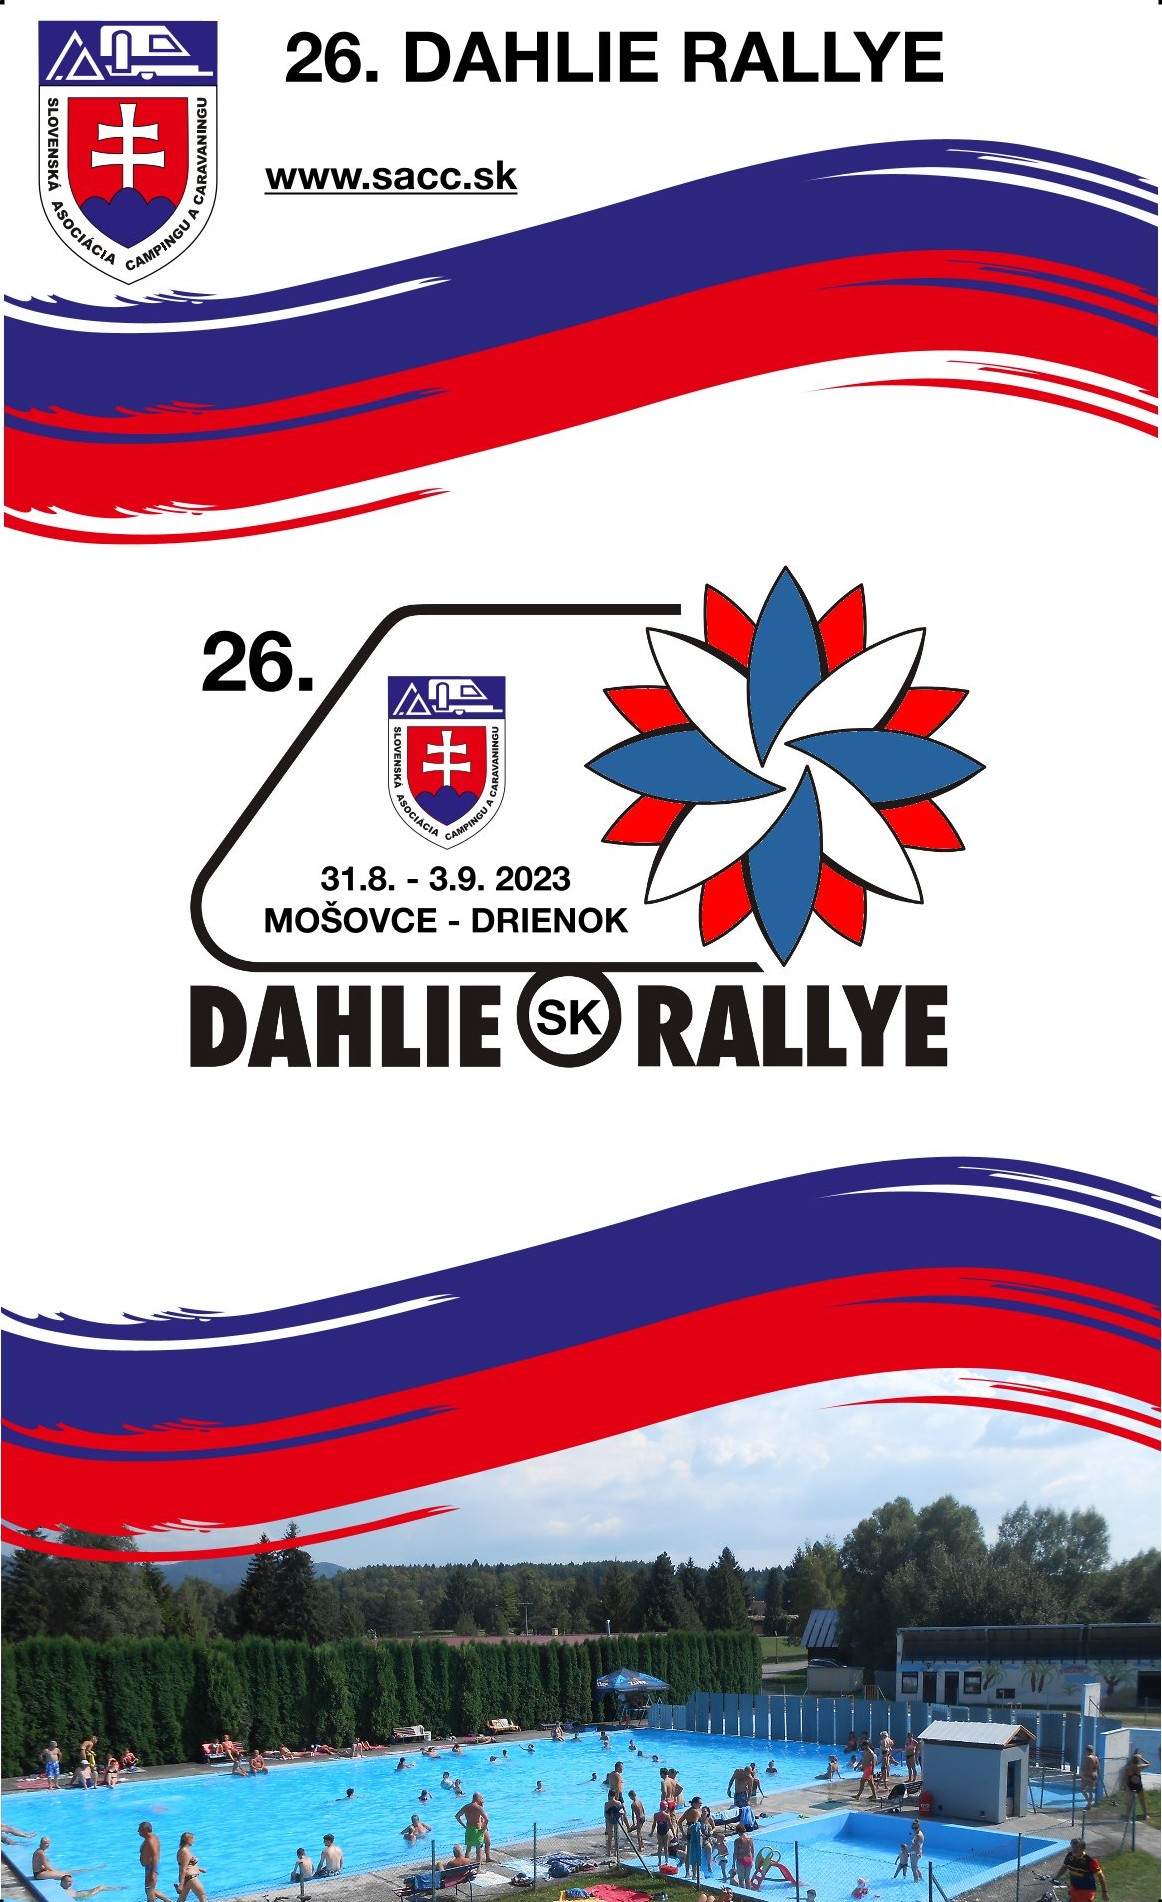 Dahlie Rallye plagát 2023 1